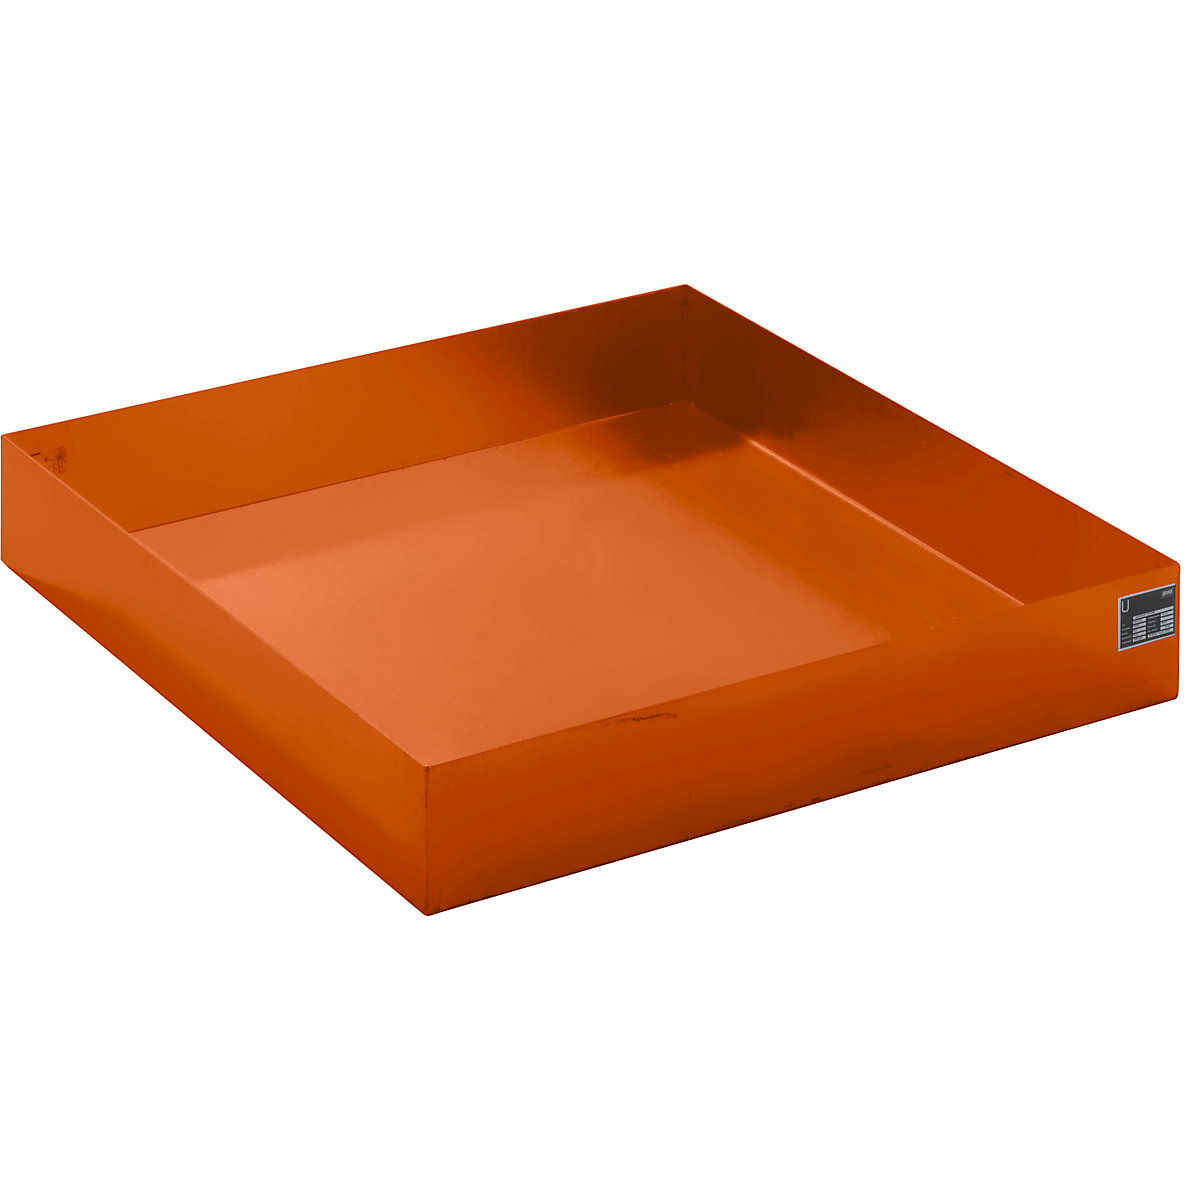 EUROKRAFTbasic – Pallet sump tray, LxWxH 1200 x 1200 x 185 mm, orange RAL 2000